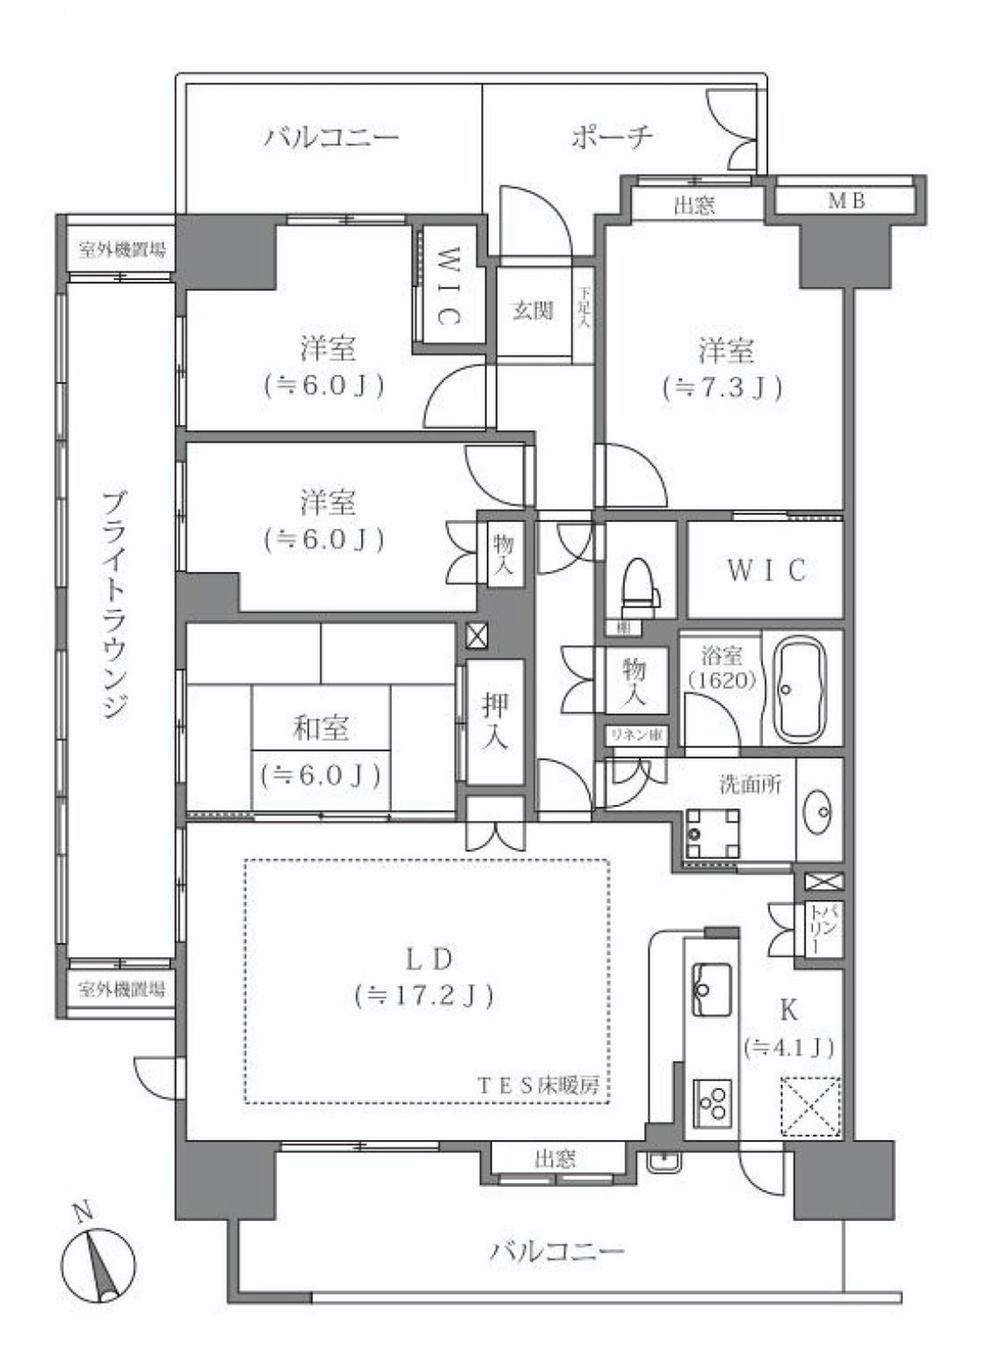 Floor plan. 4LDK, Price 39,800,000 yen, The area occupied 118.3 sq m , Balcony area 22.48 sq m